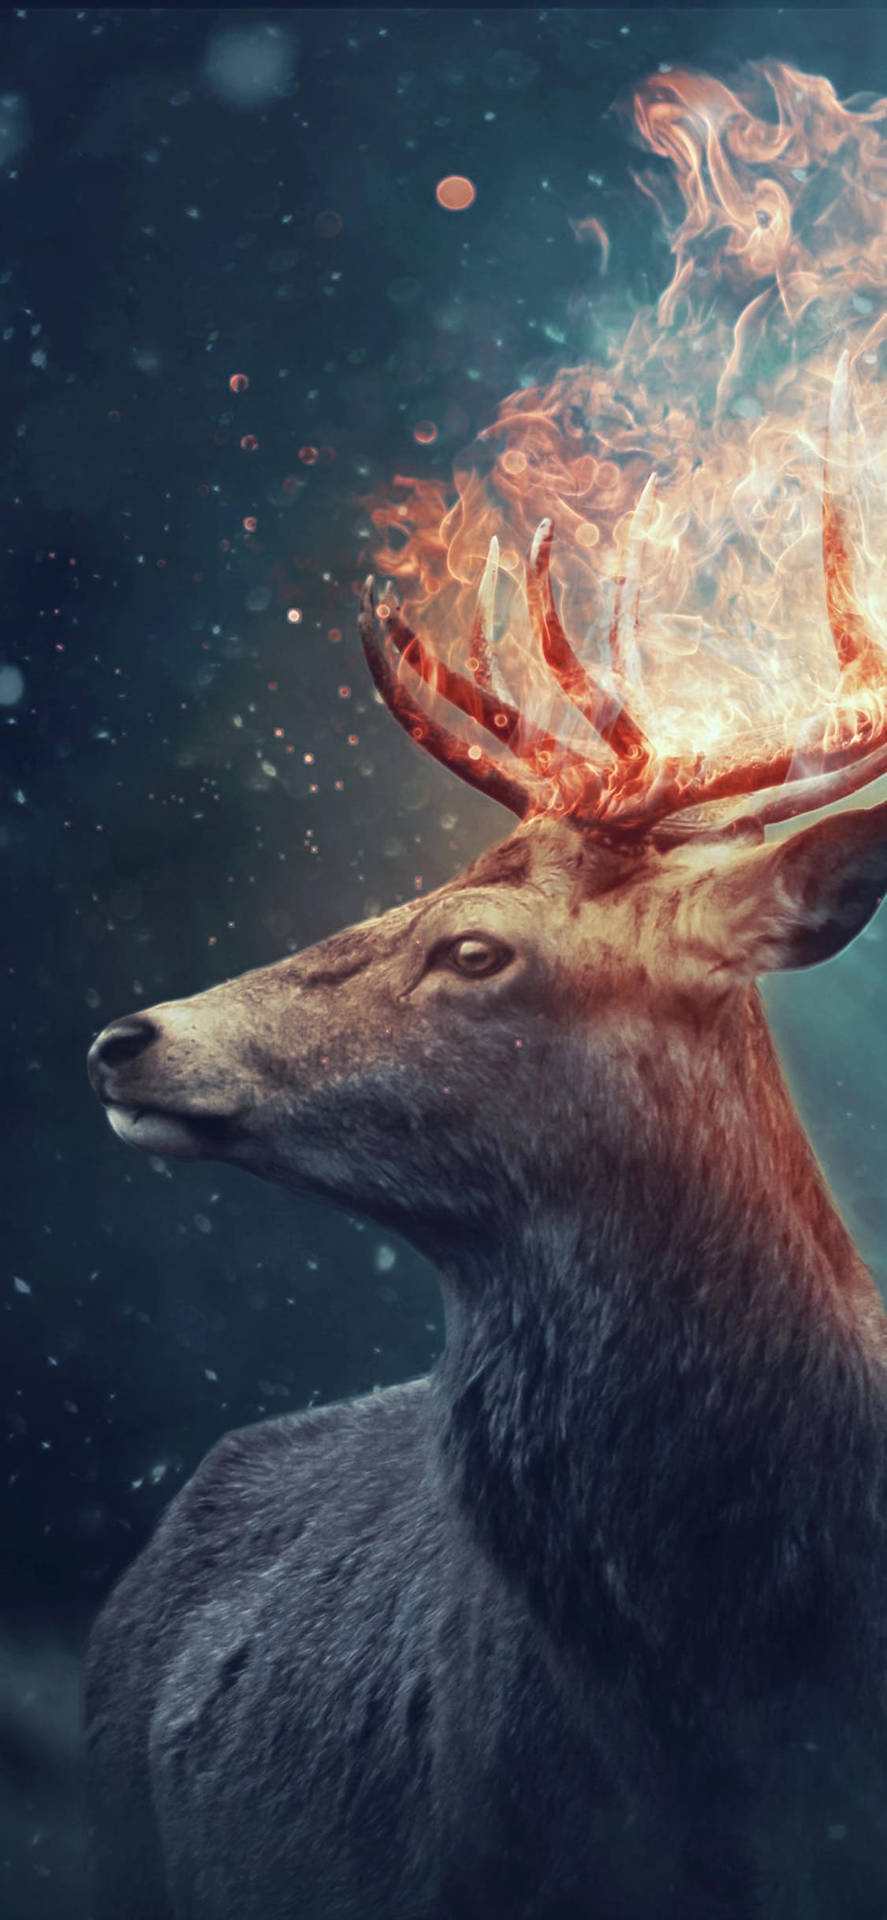 Flaming Deer Horn Aesthetic Iphone Xr Wallpaper